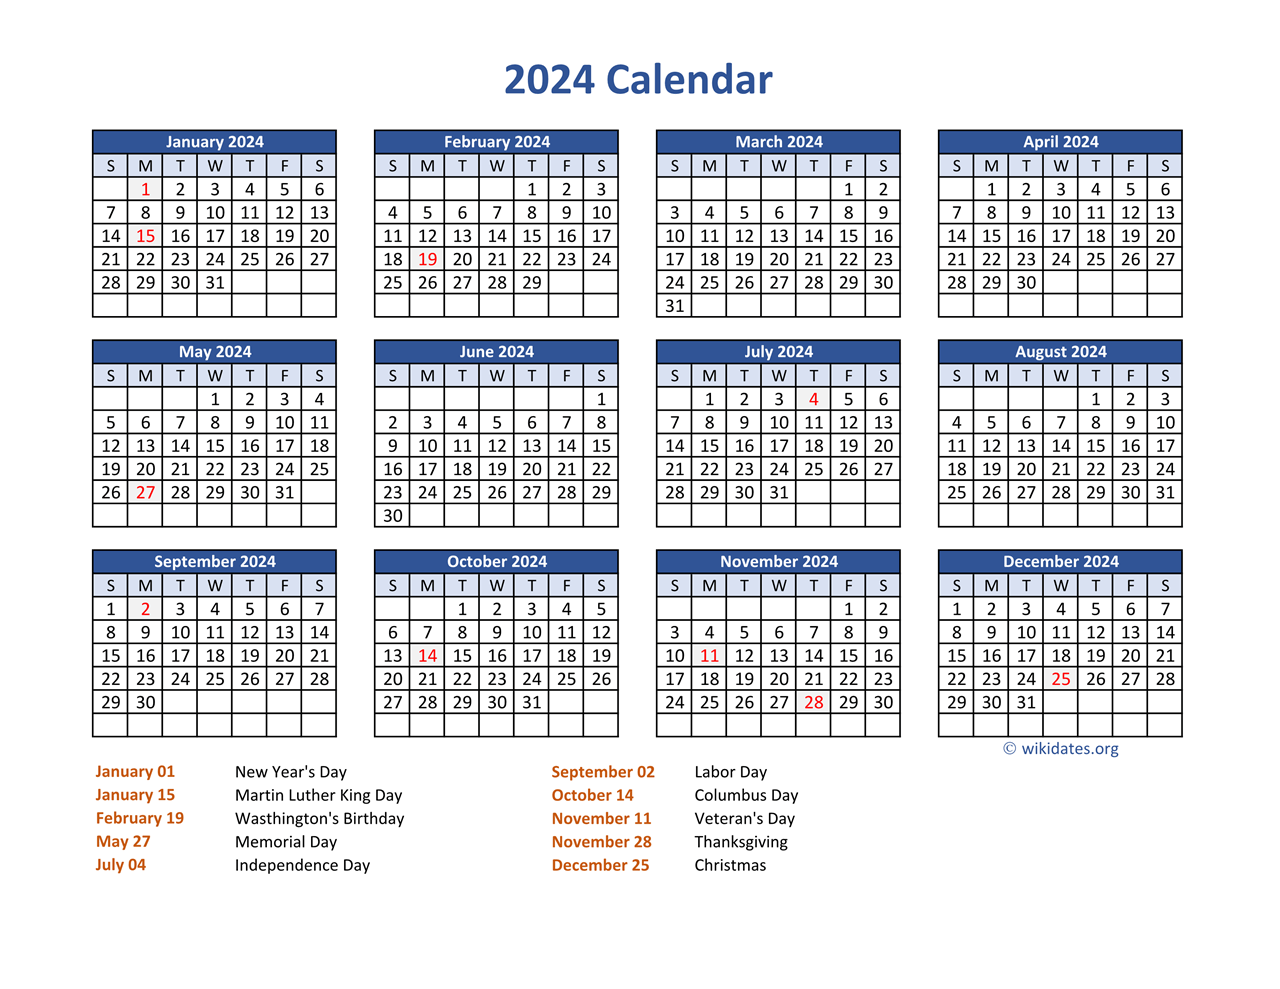 Pdf Calendar 2024 With Federal Holidays | Wikidates for Free Printable 2024 Calendar With Federal Holidays